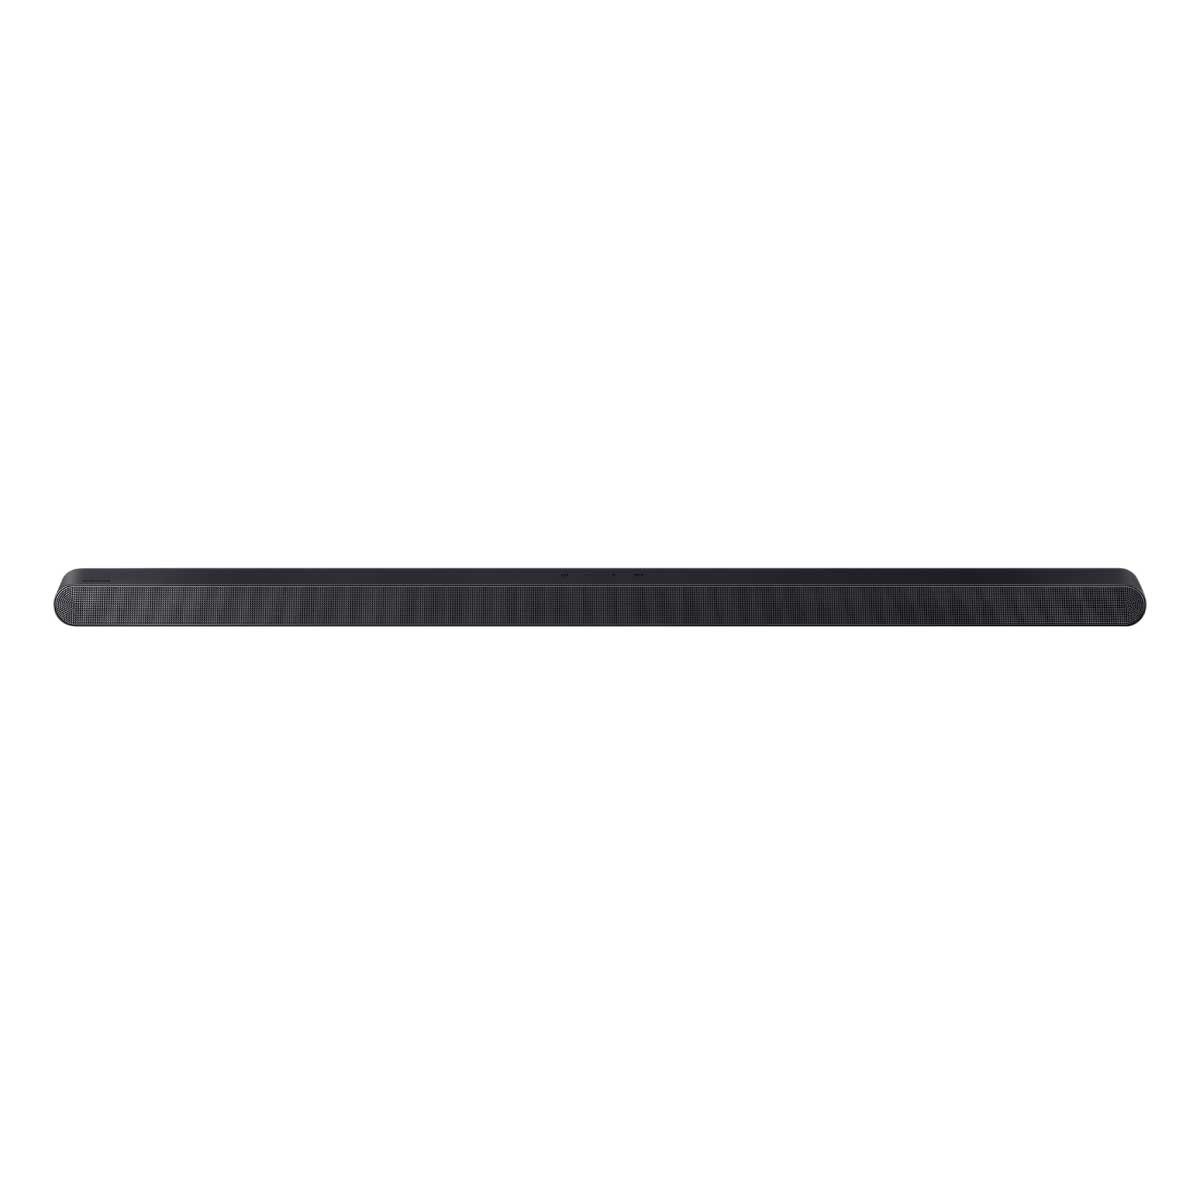 SAMSUNG Soundbar Ultra Slim ชุดลำโพงซาวด์บาร์ รุ่น HW-S700D/XT